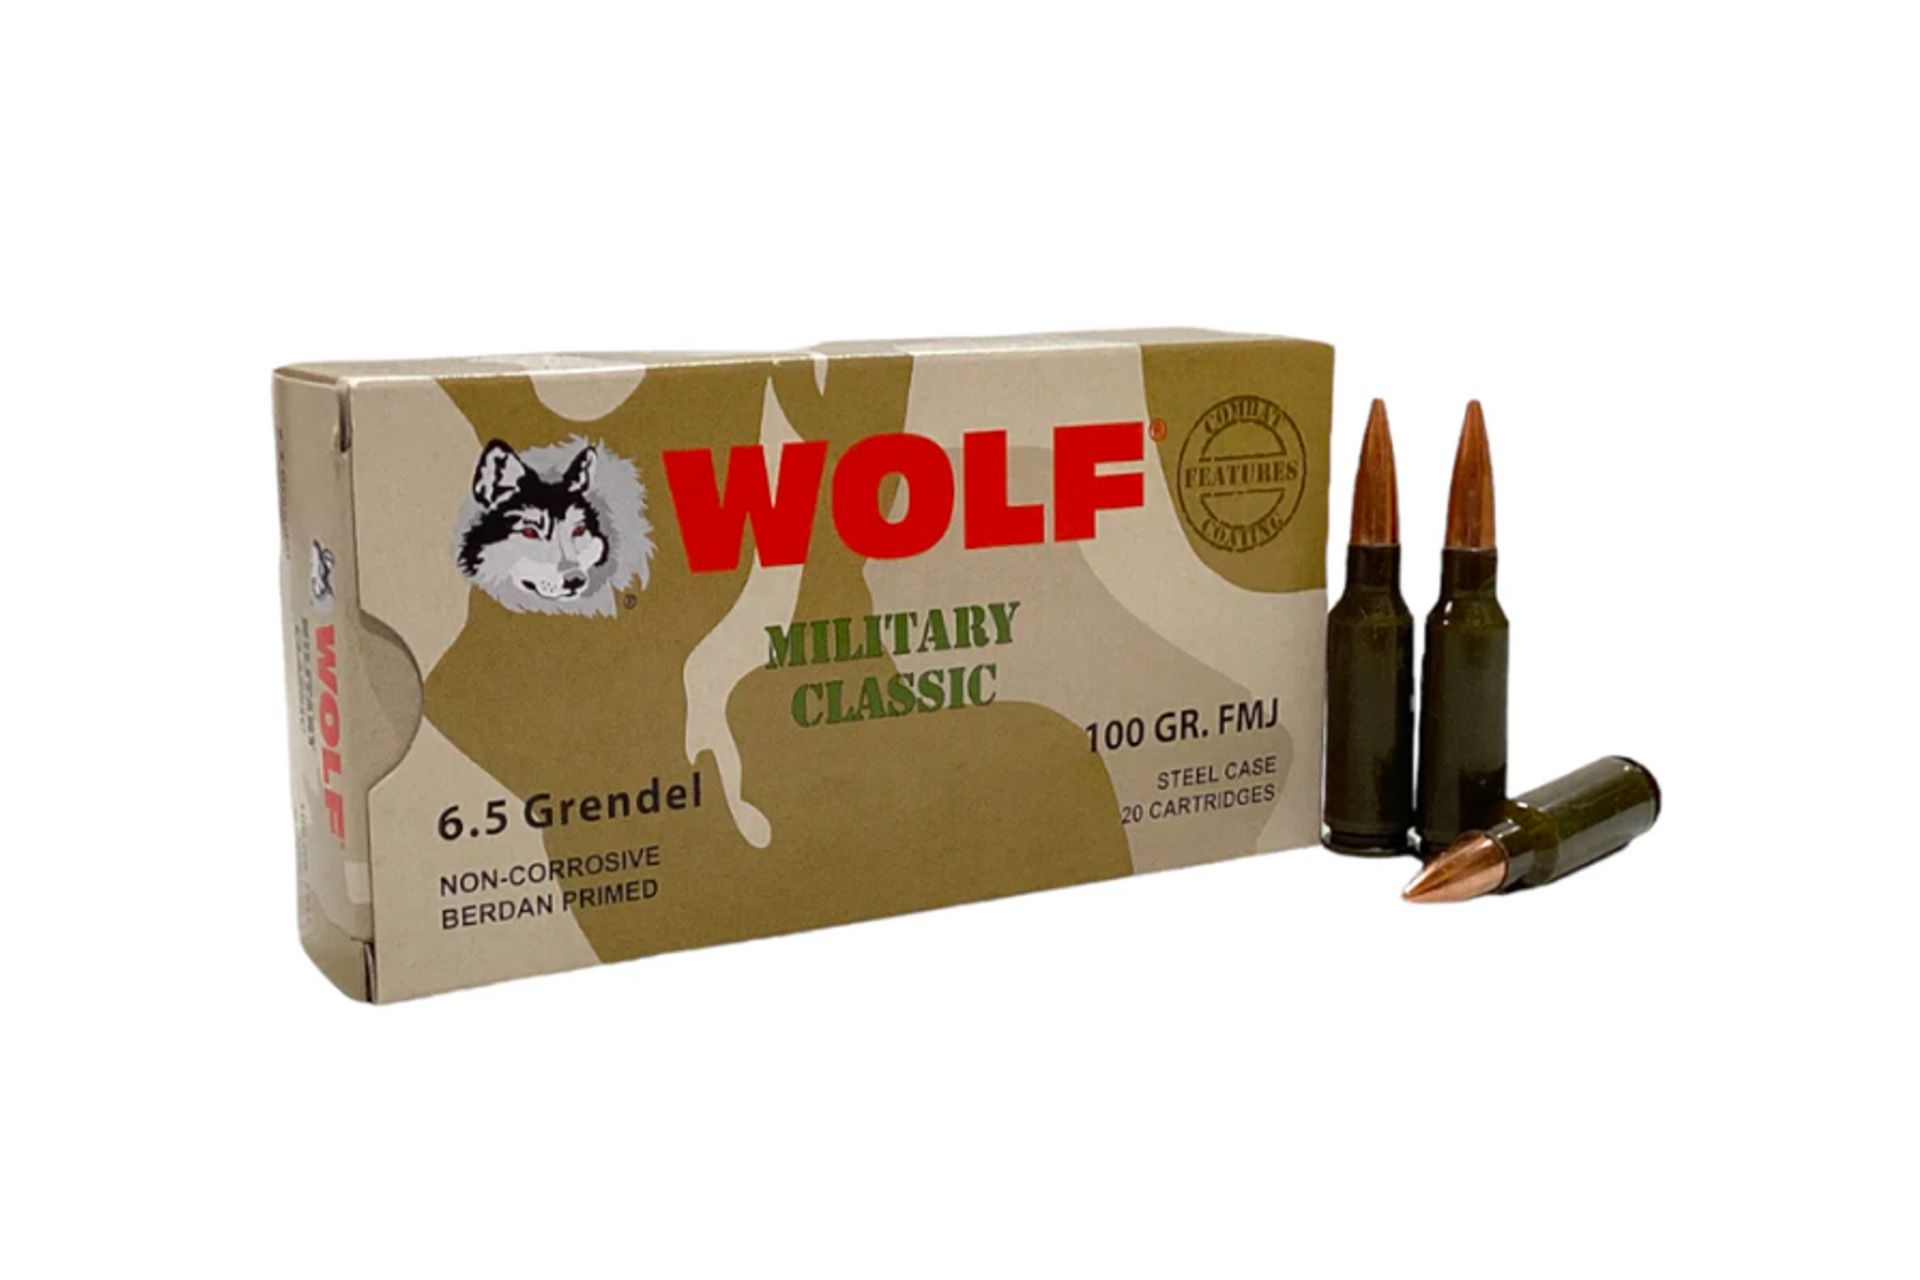 Wolf 6.5 Grendel 100gr FMJ Steel-Cased Rifle Ammo – 20 round box